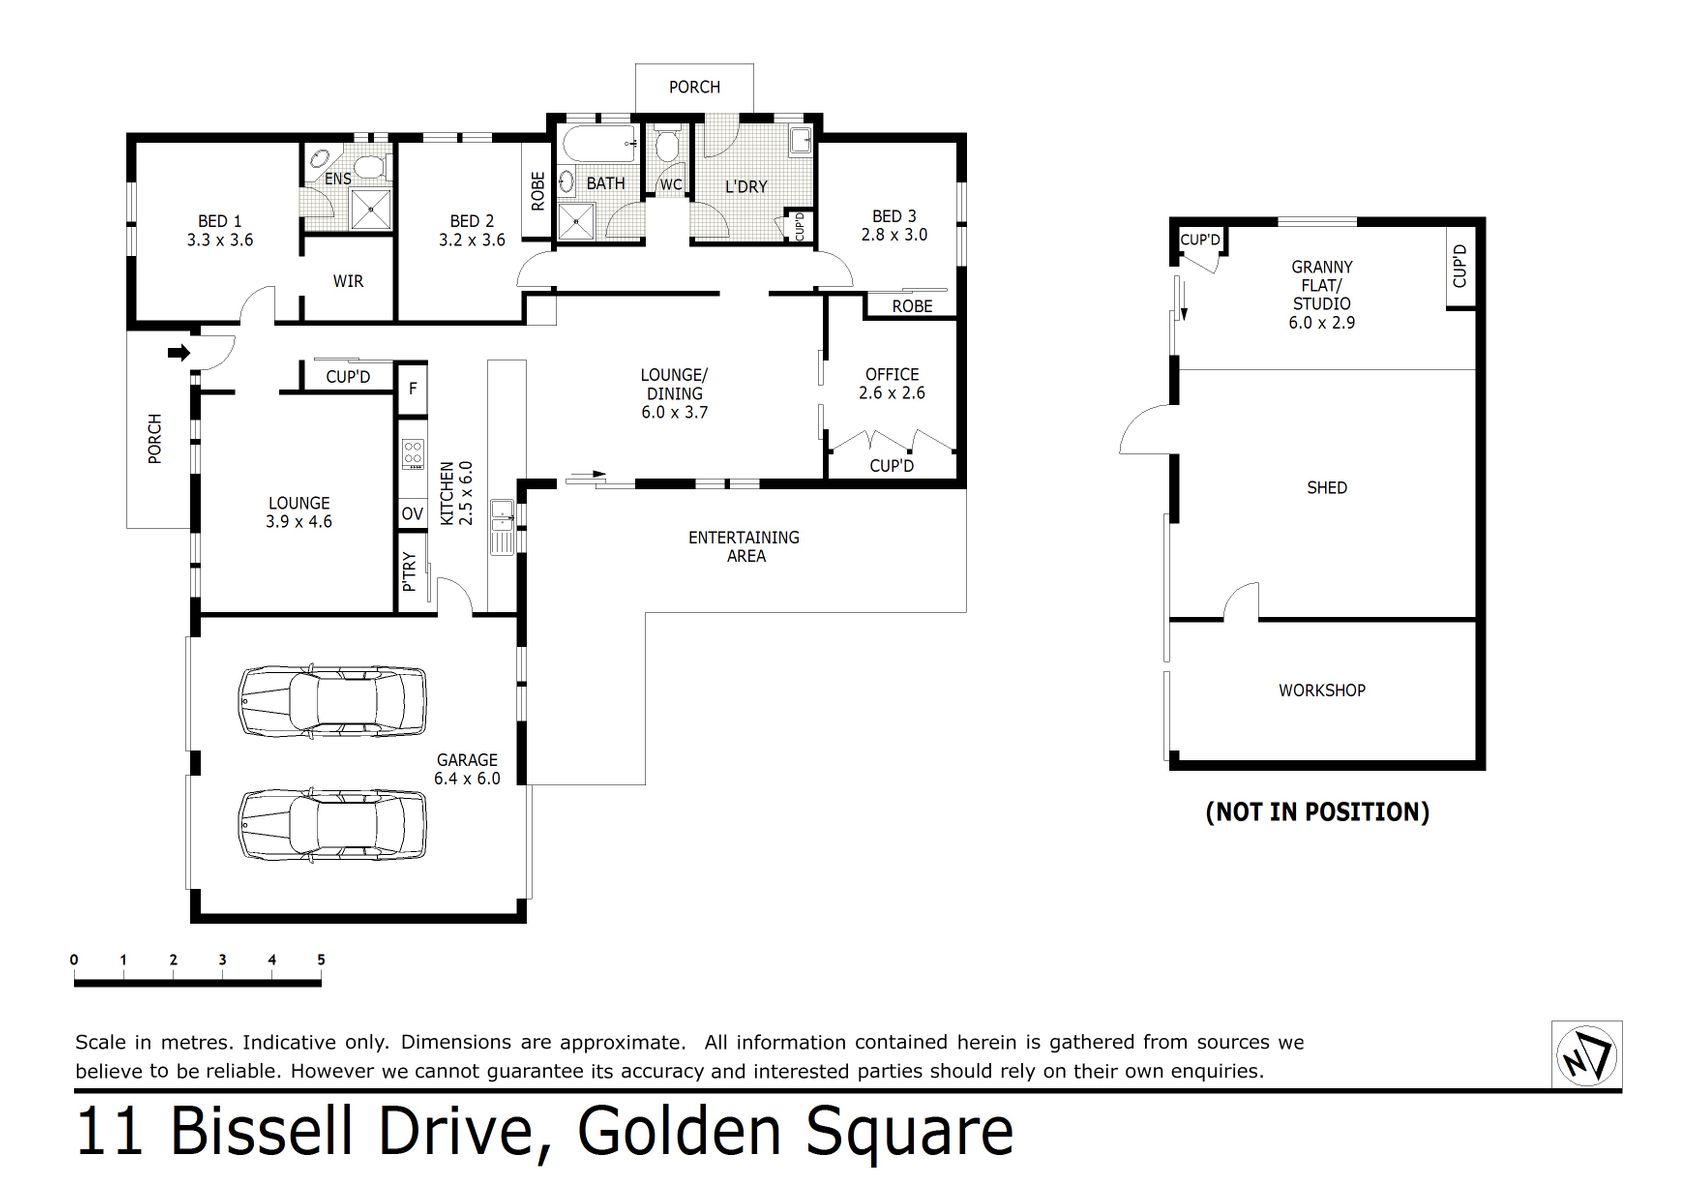 11 Bissell Drive Golden Square (10 NOV 2020) 166sqm